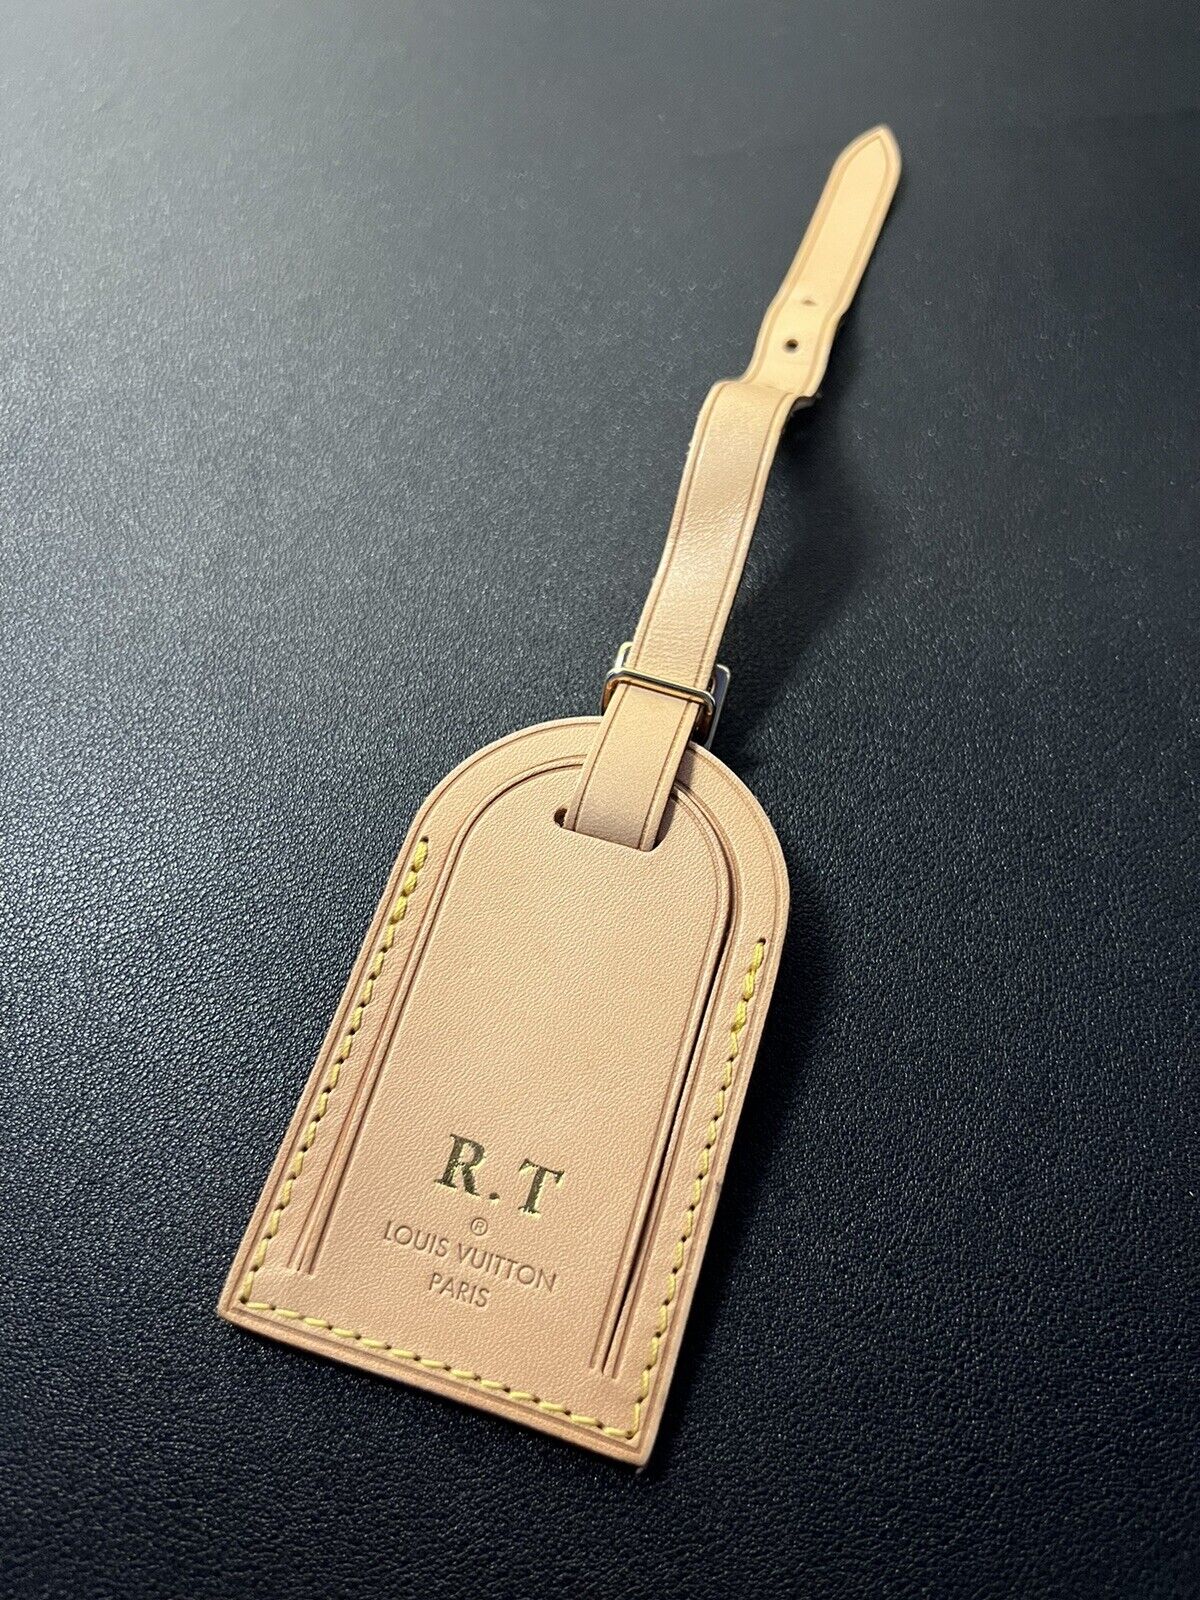 Louis Vuitton Name Tag w/ RT - Natural Vachetta Large